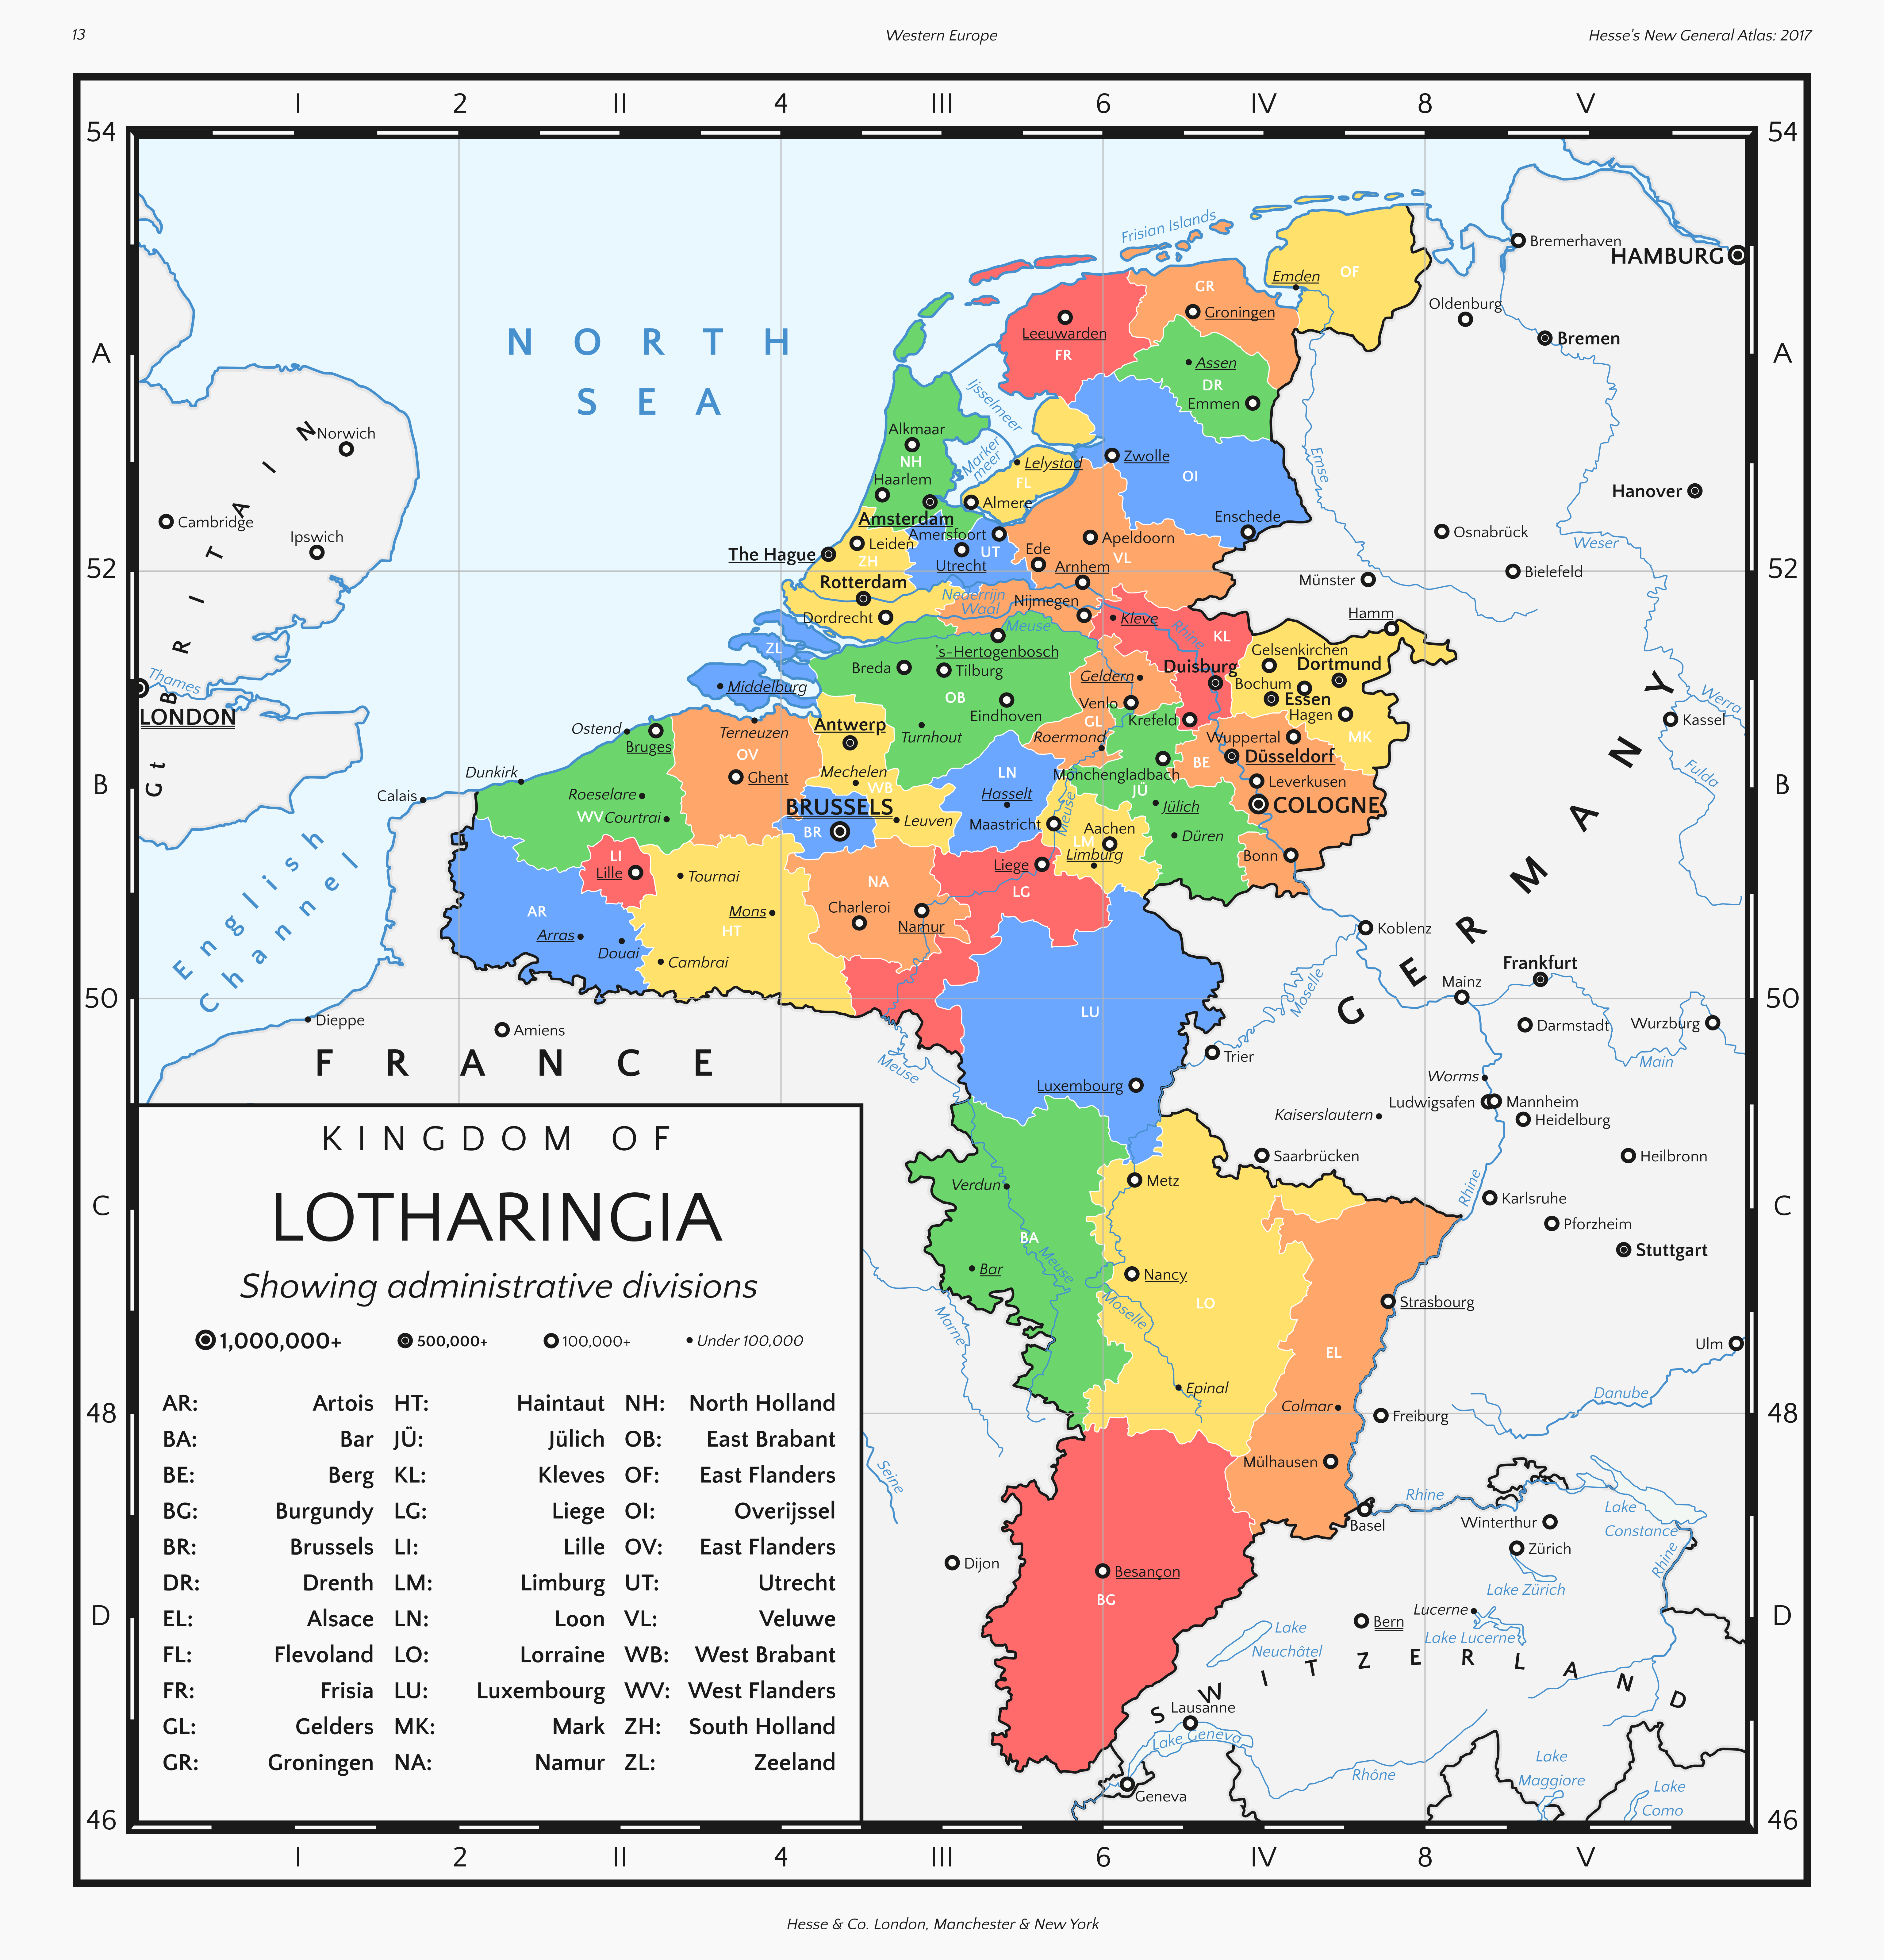 The Kingdom of Lotharingia in 2017